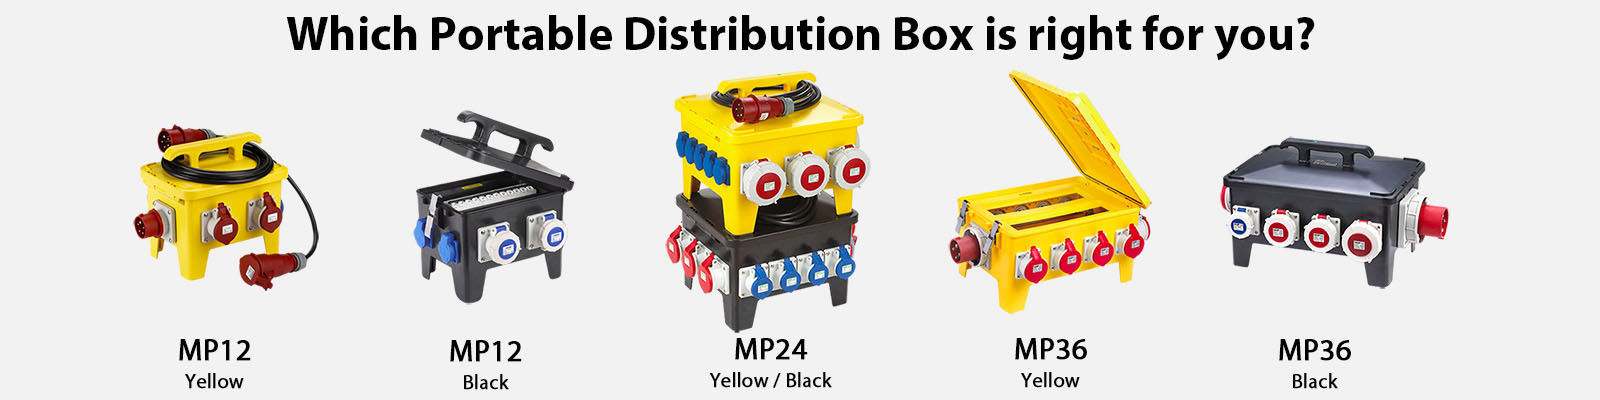 Portable Distribution Box